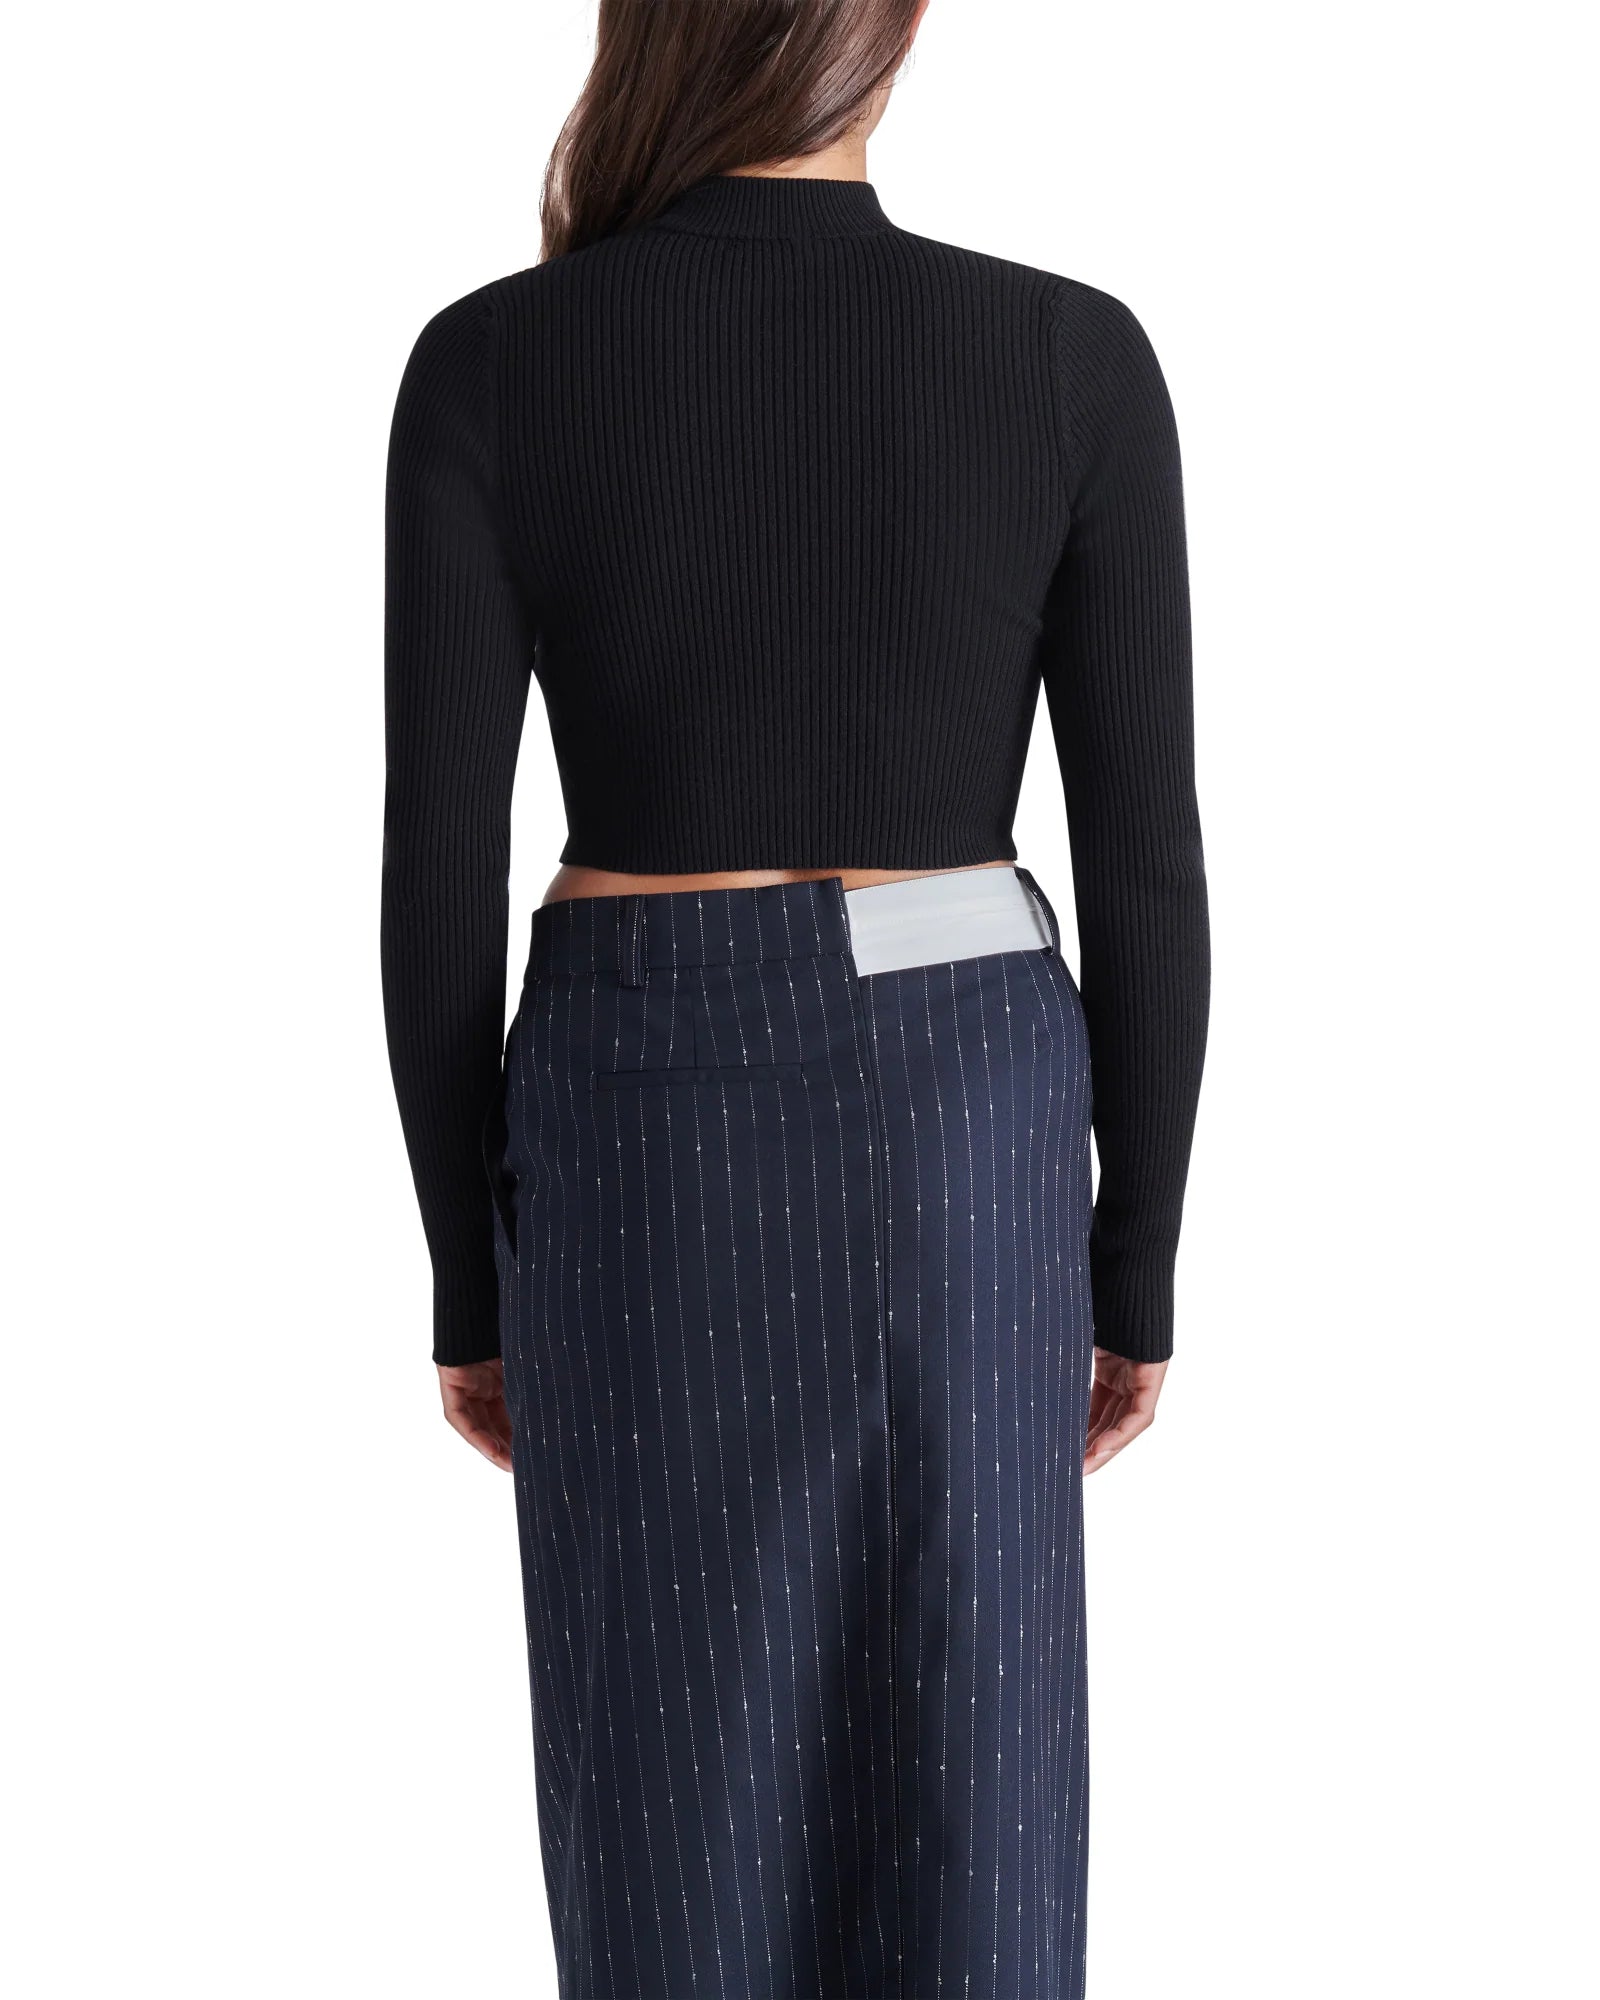 Maaike Pinstriped Maxi Skirt - Navy - Blue Sky Fashions & Lingerie